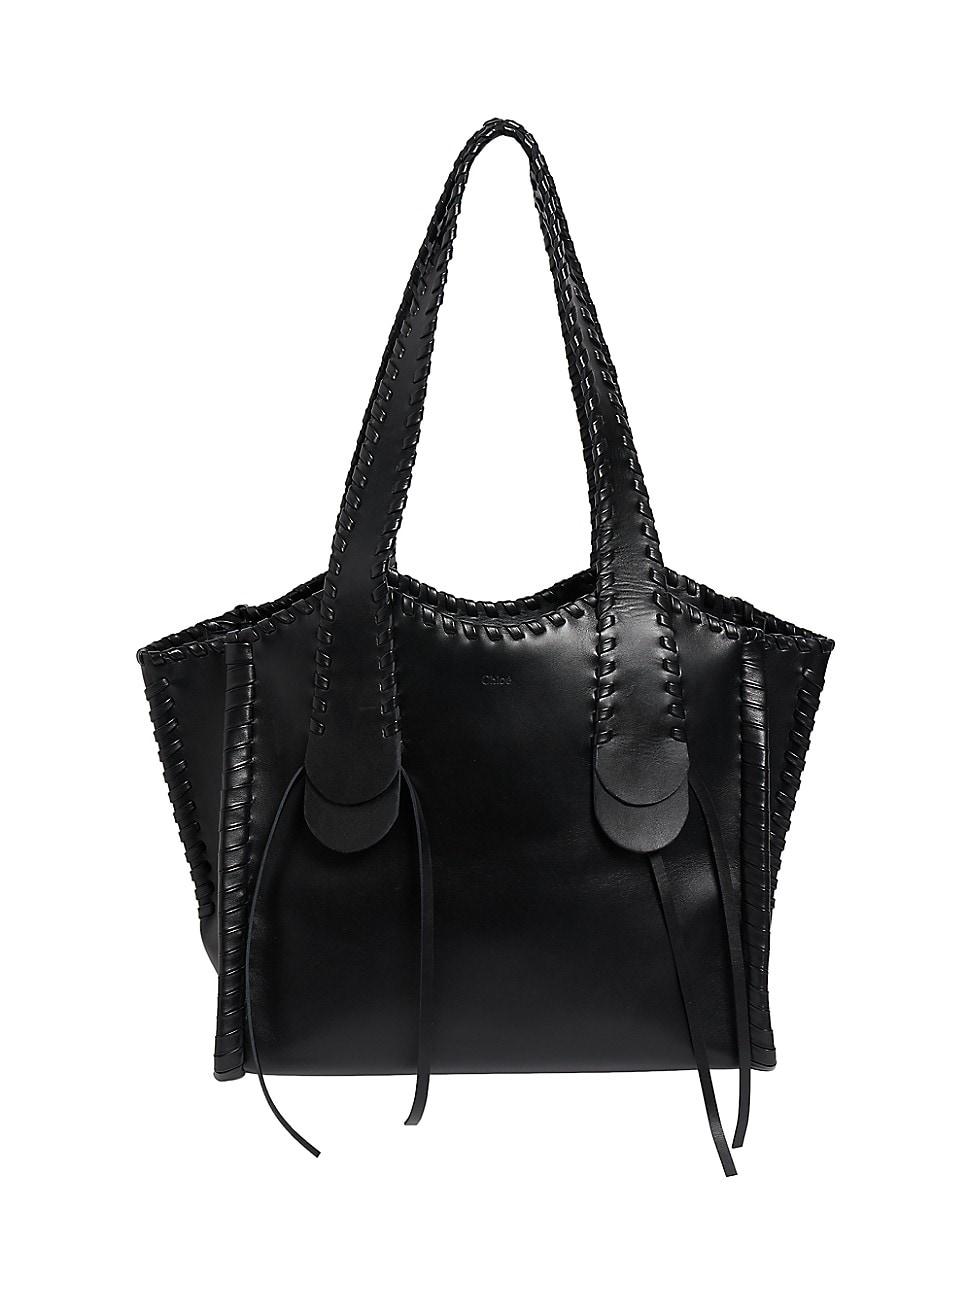 Chloé Medium Mony Leather Tote Bag in Black | Lyst